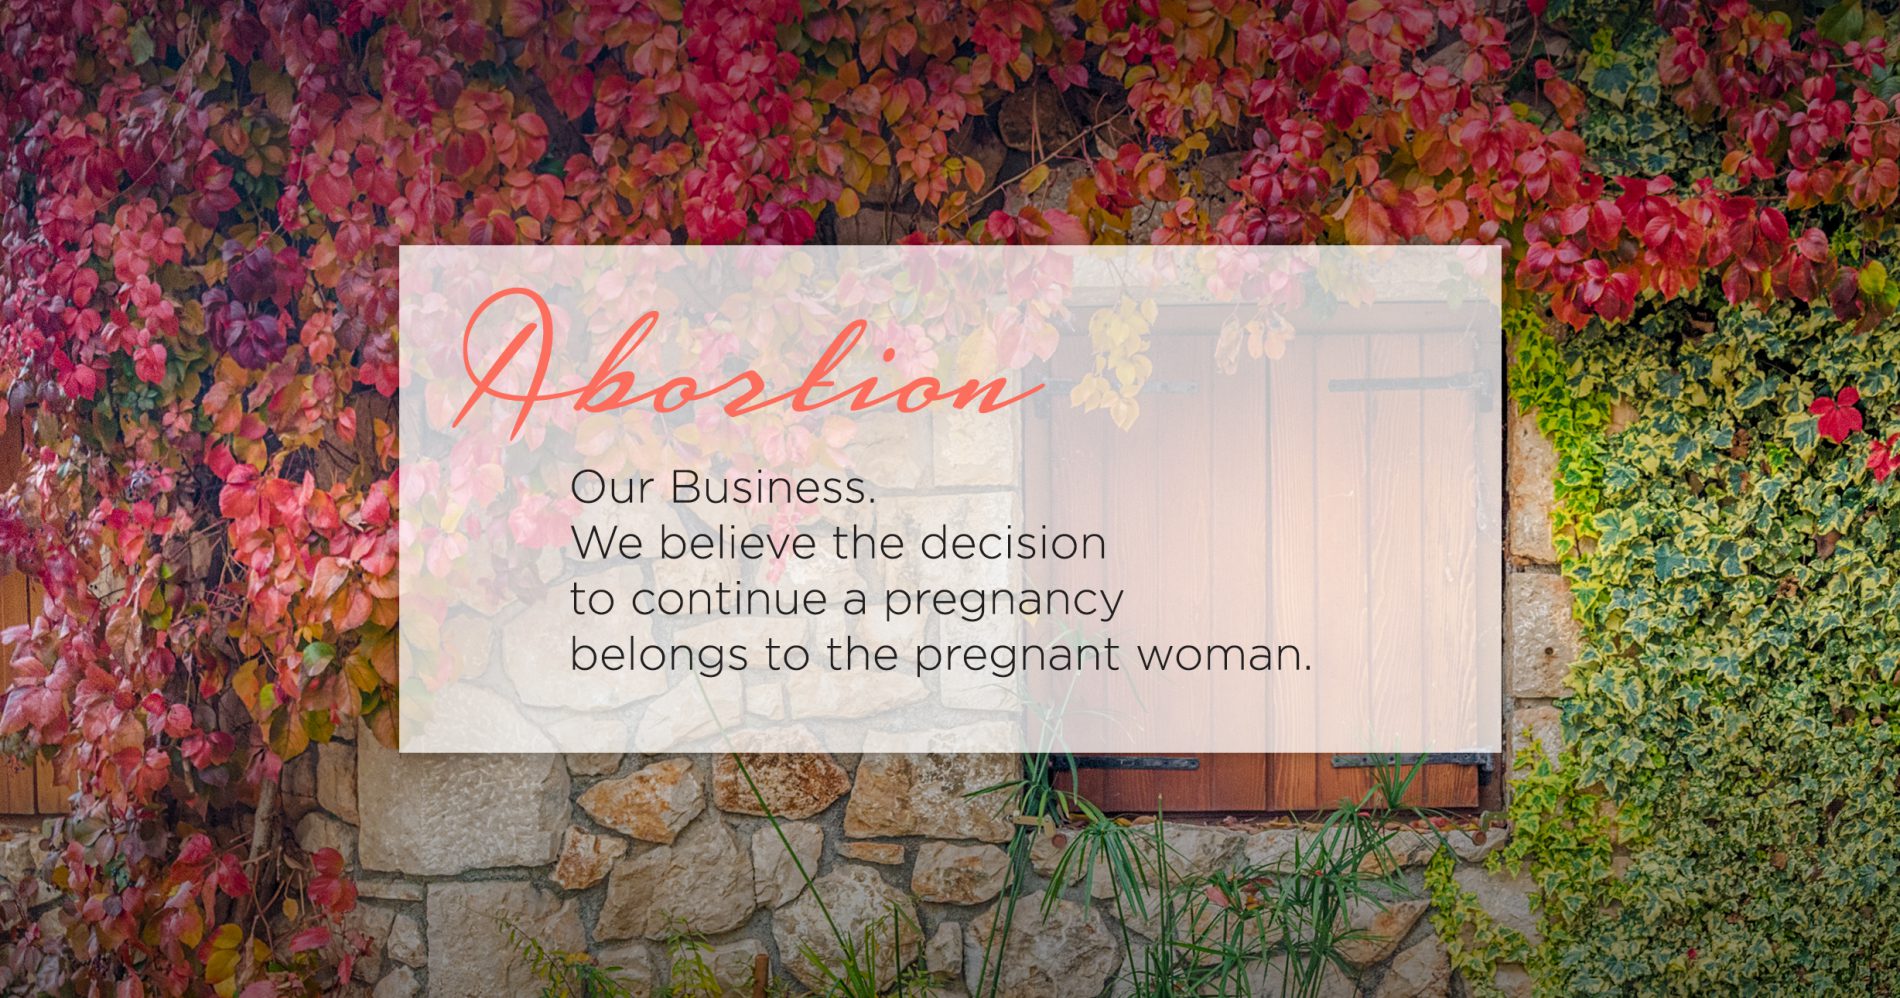 Abortion by Pill - Bristol Women's Health abortion clinic in Bristol, Virginia